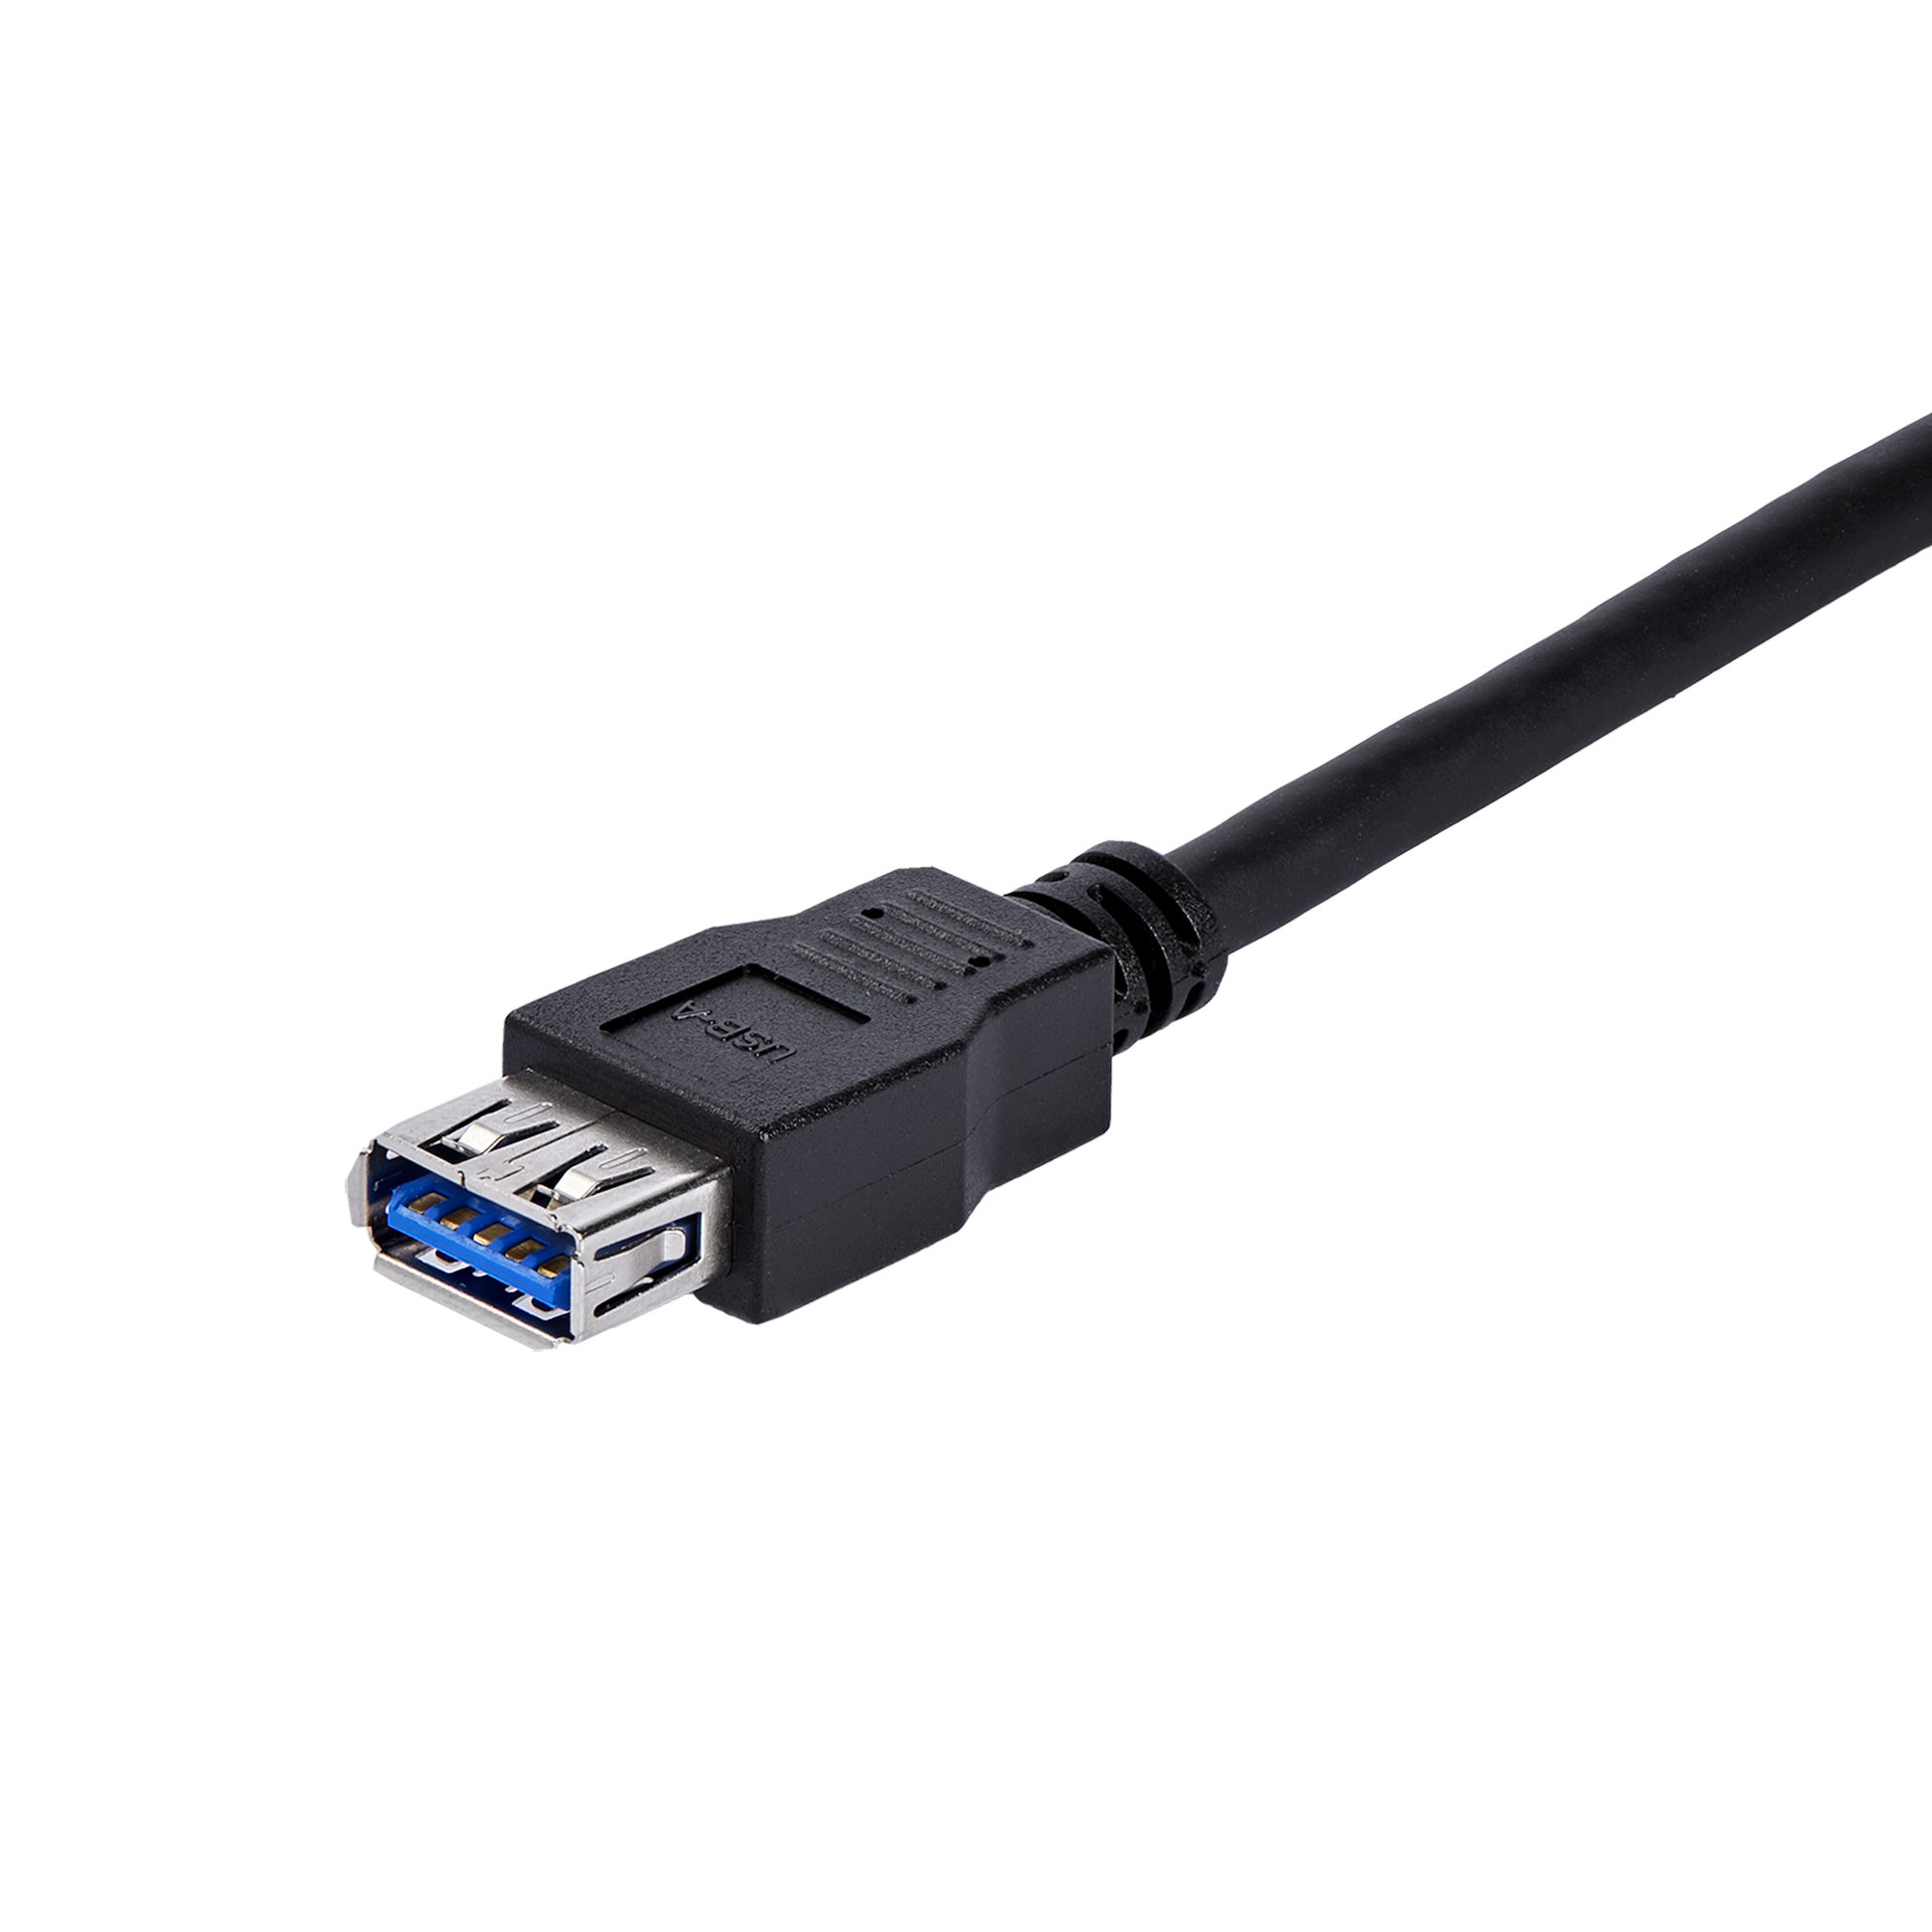 1m Black USB 3.0 Extension Cable M/F - Cavi USB 3.0